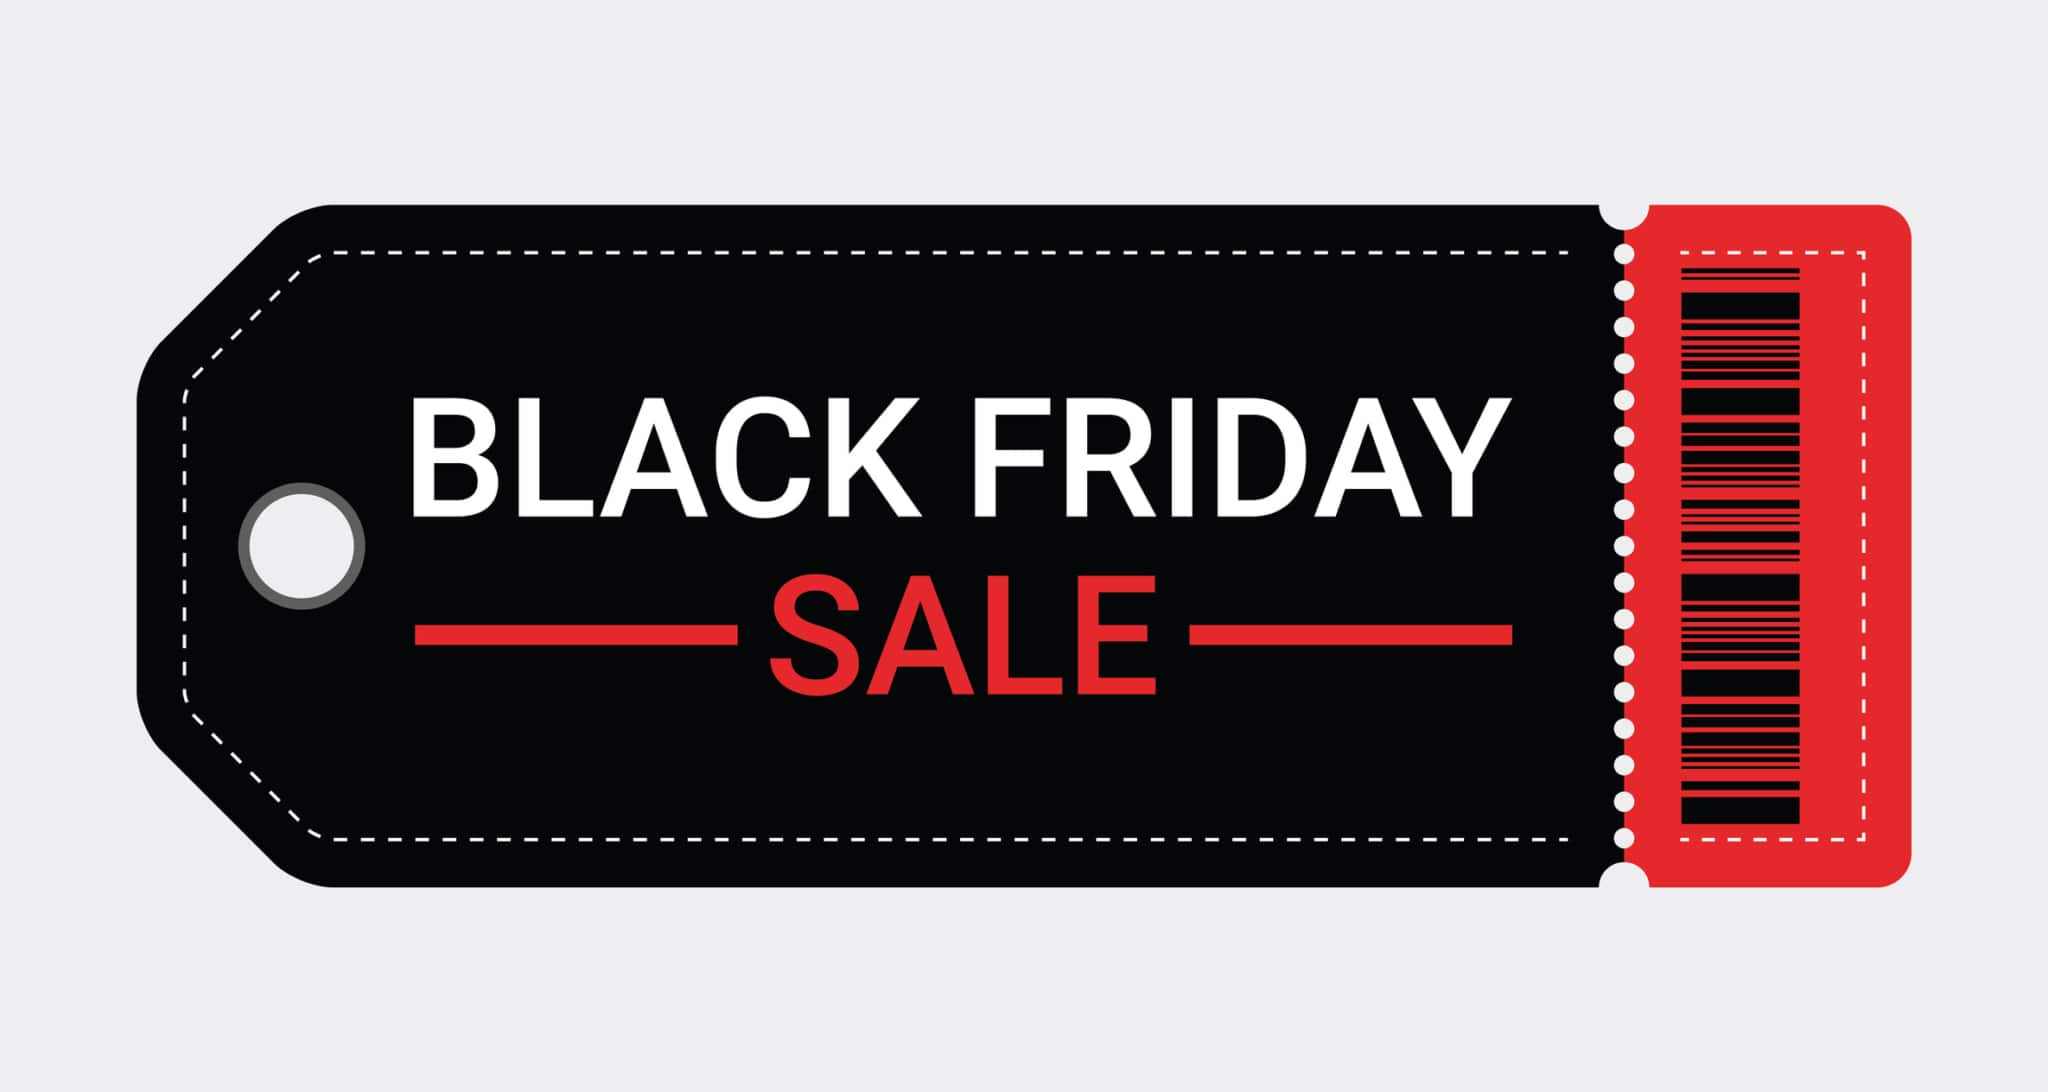 Black Friday sale symbol